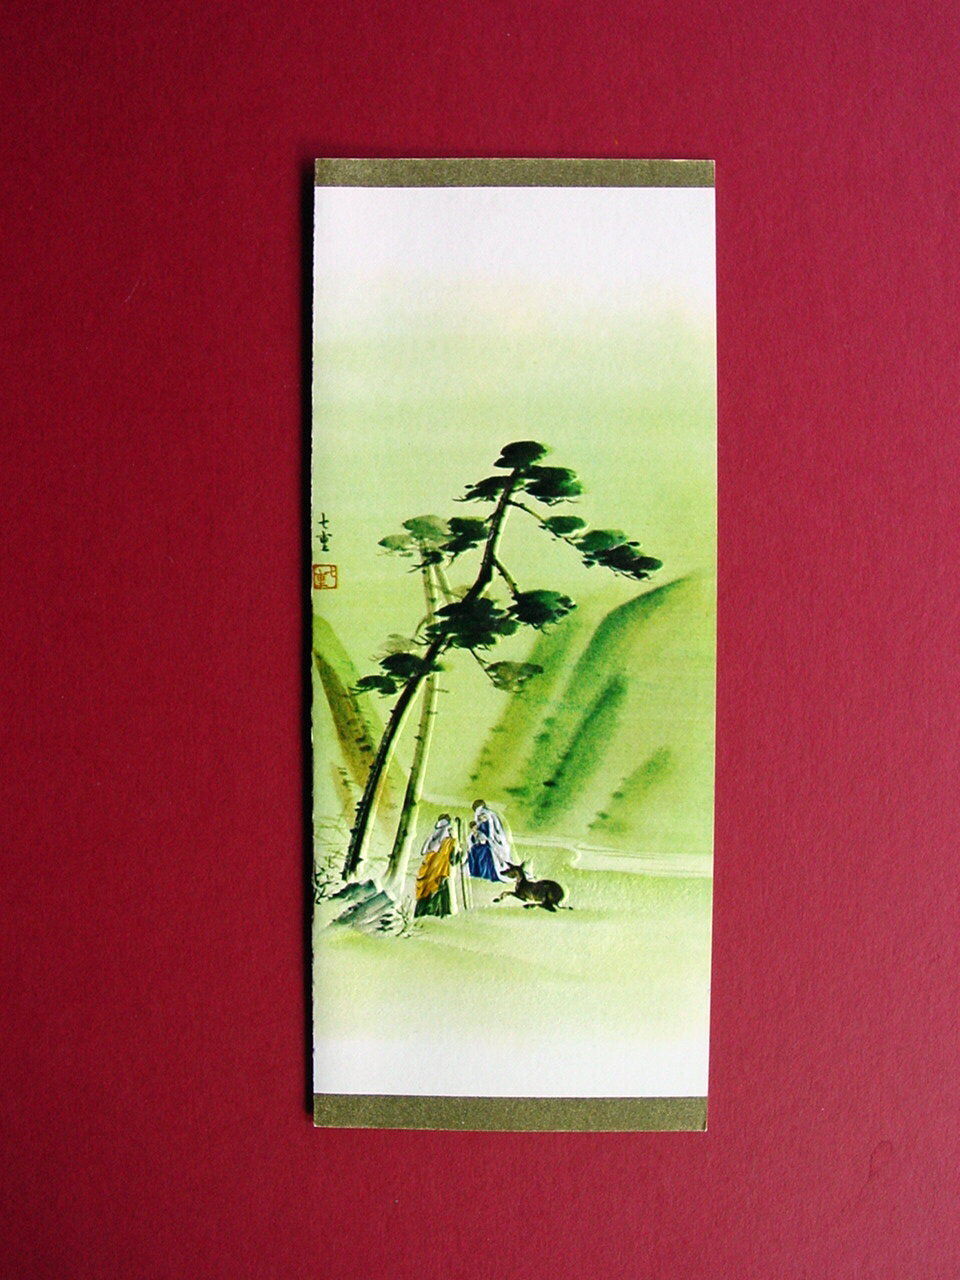 B320 Unused Hallmark Slim Jim\'s Xmas Greeting Card 3 Kings by Nanae Ito. Lovely